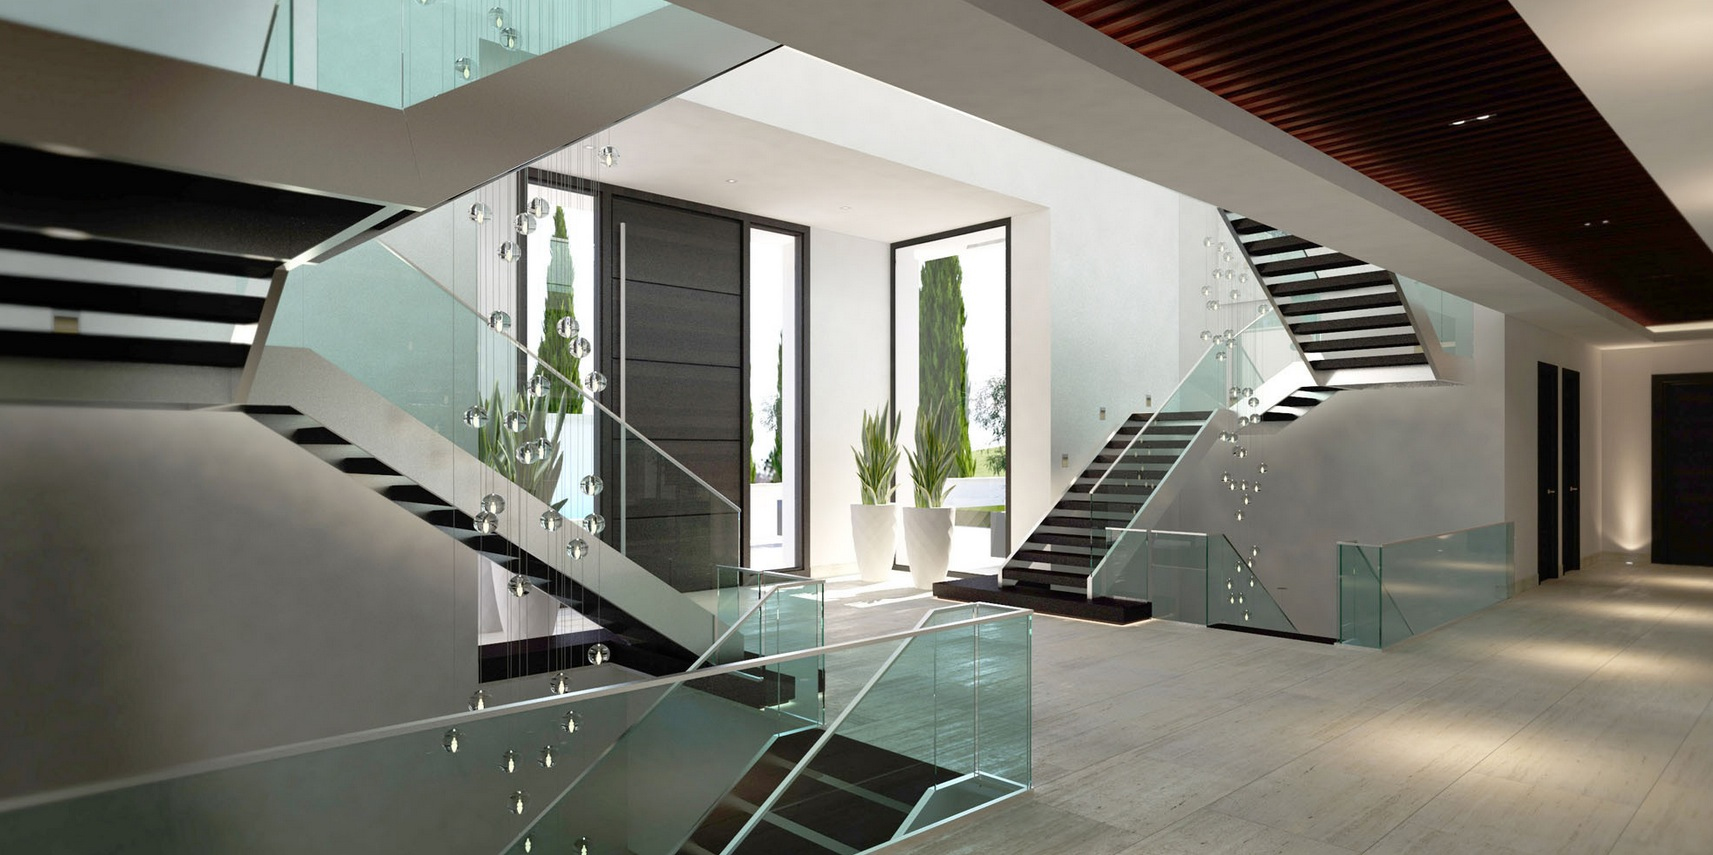 Luxurious 9 Bedroom Spanish Home With Indoor & Outdoor Pools 23